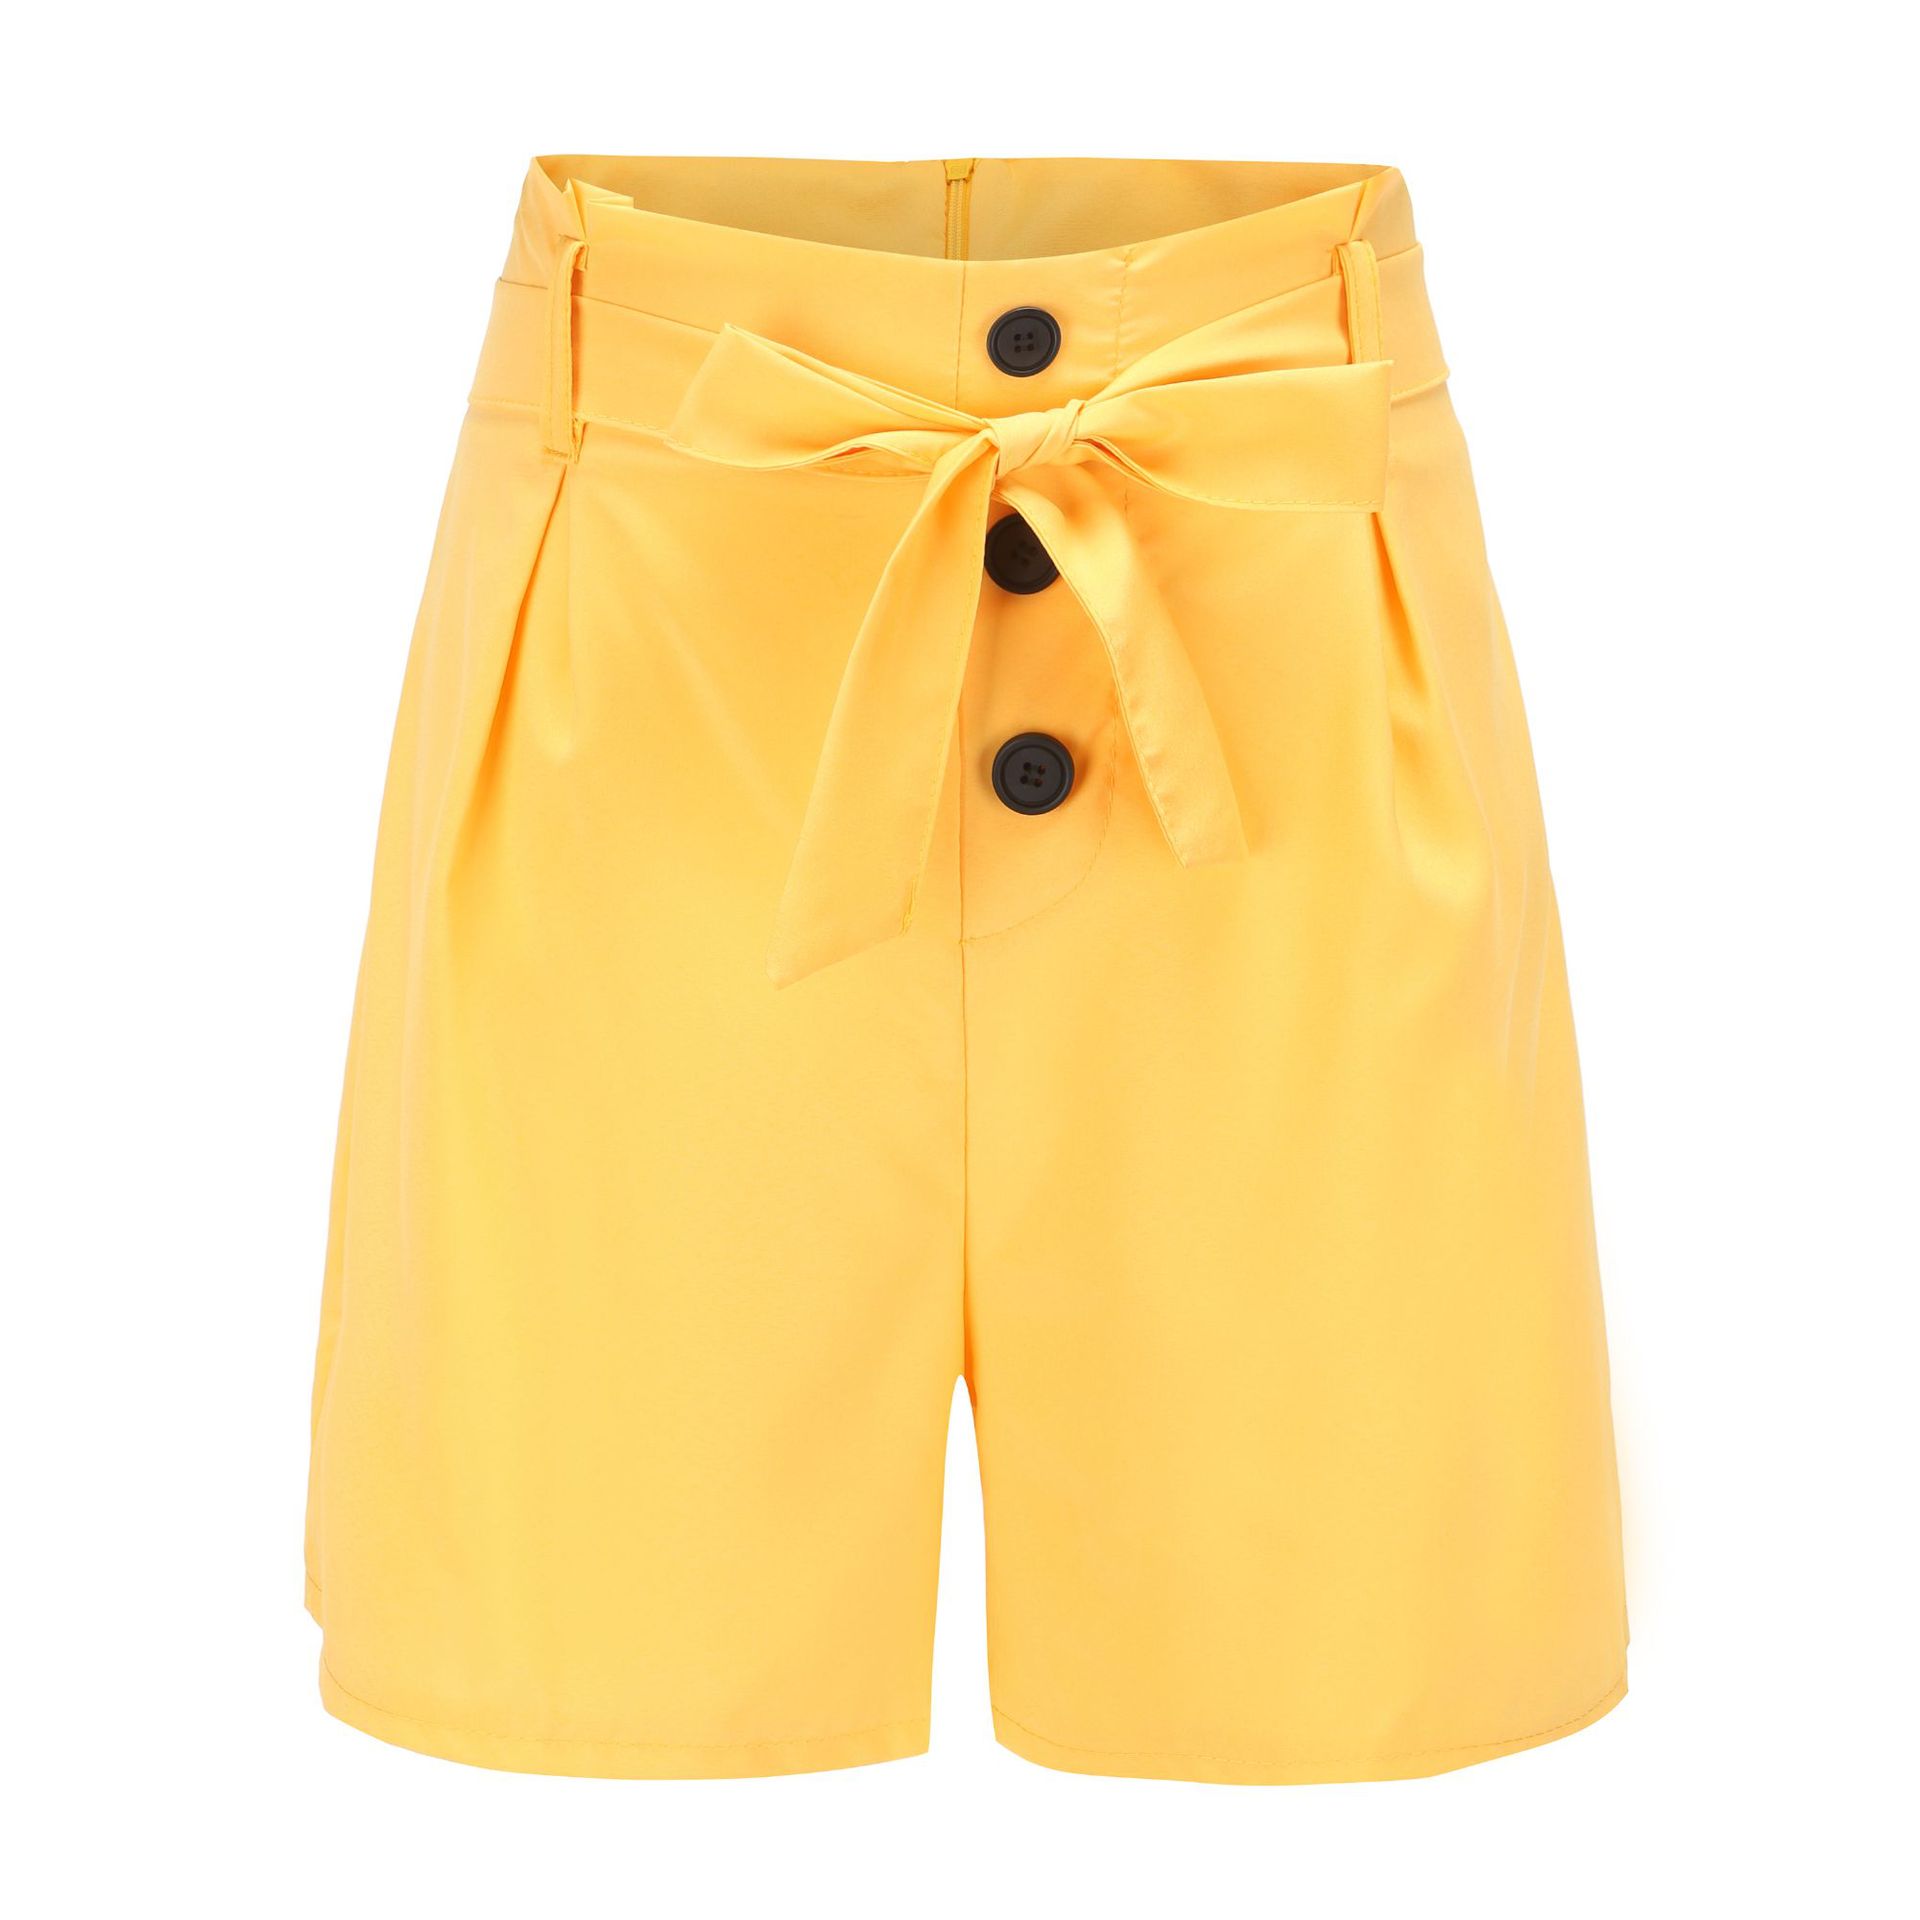 European and American wish AliExpress eBay hot sale women's shorts slim fashion sexy high waist belt beach shorts